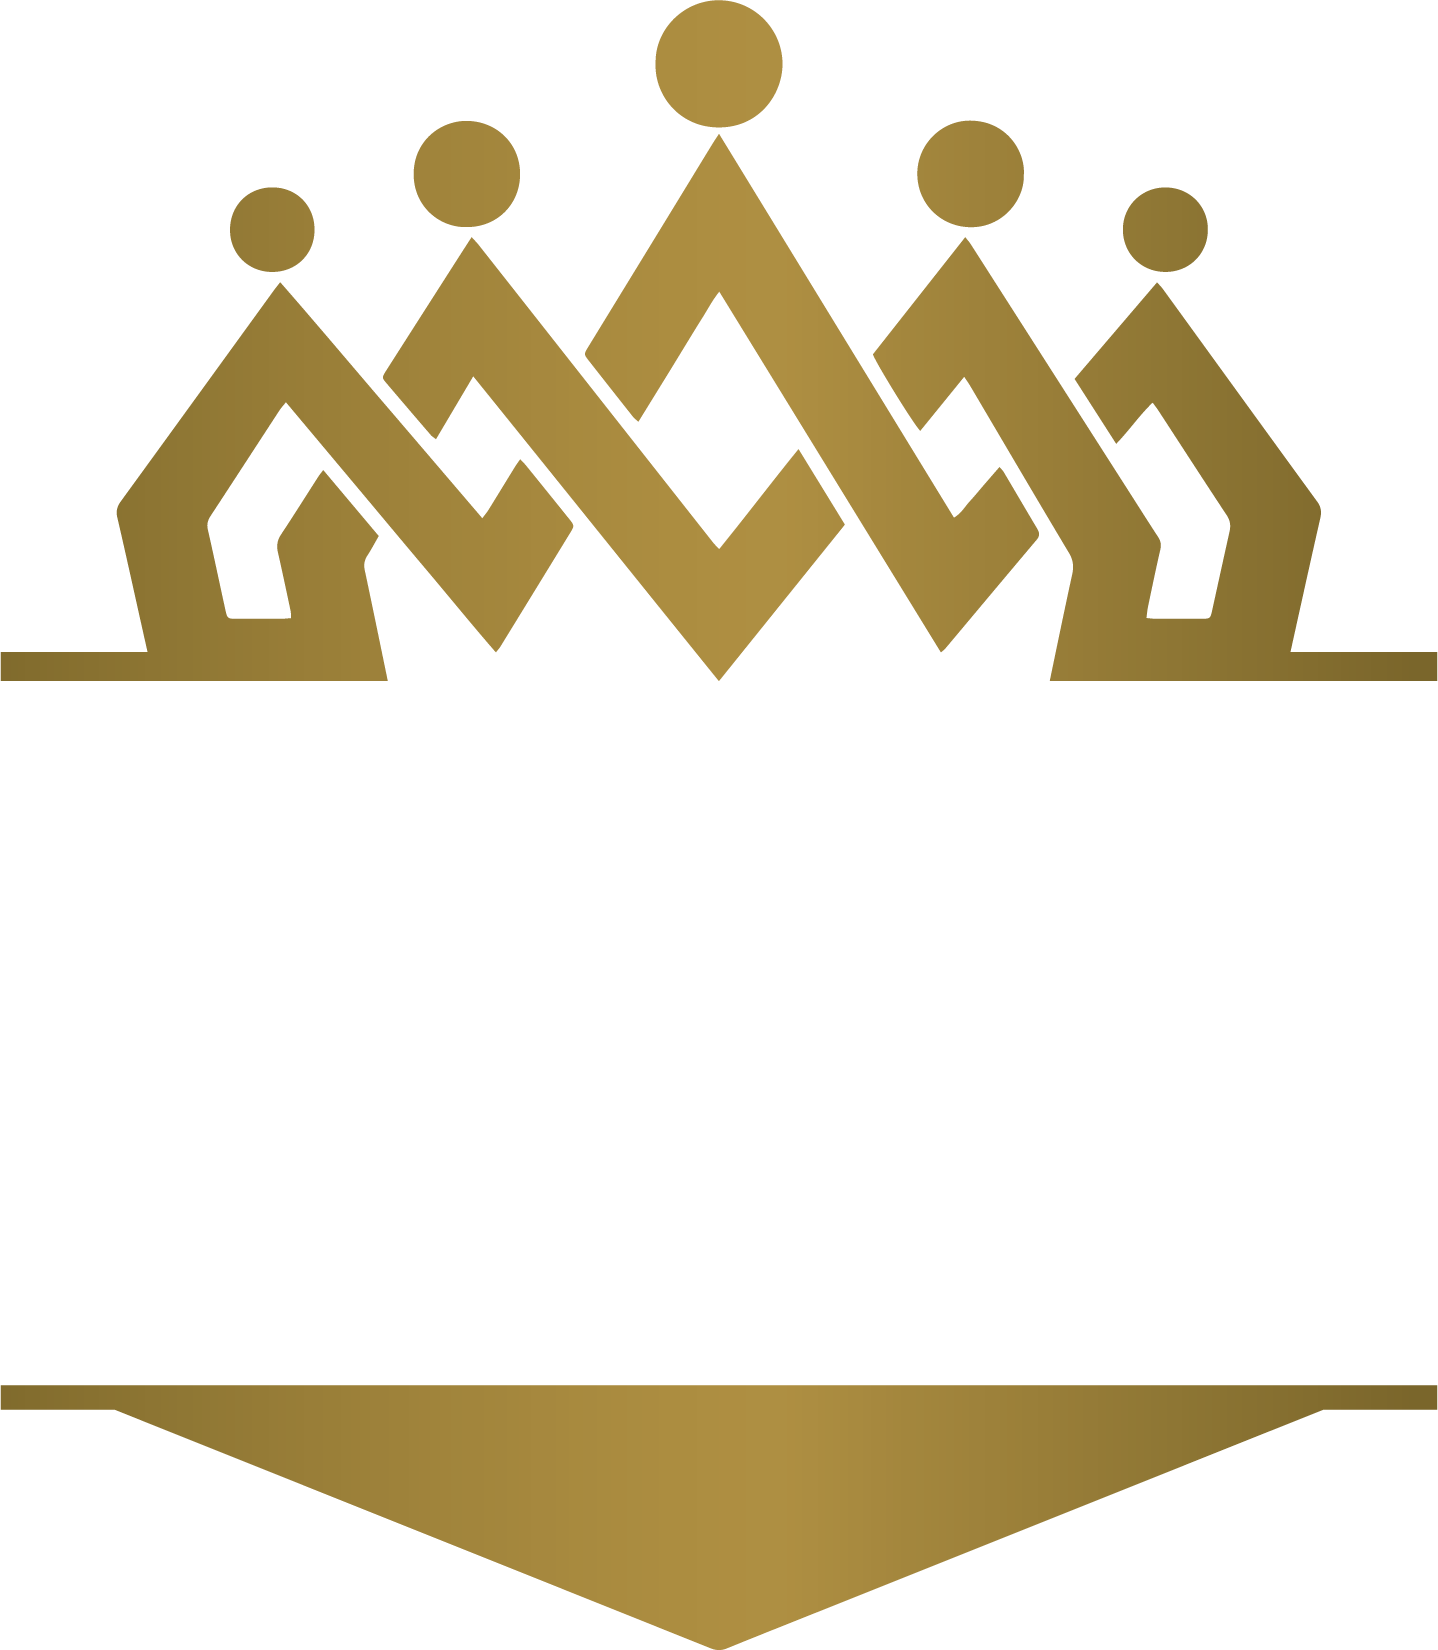 The Barber Bishop